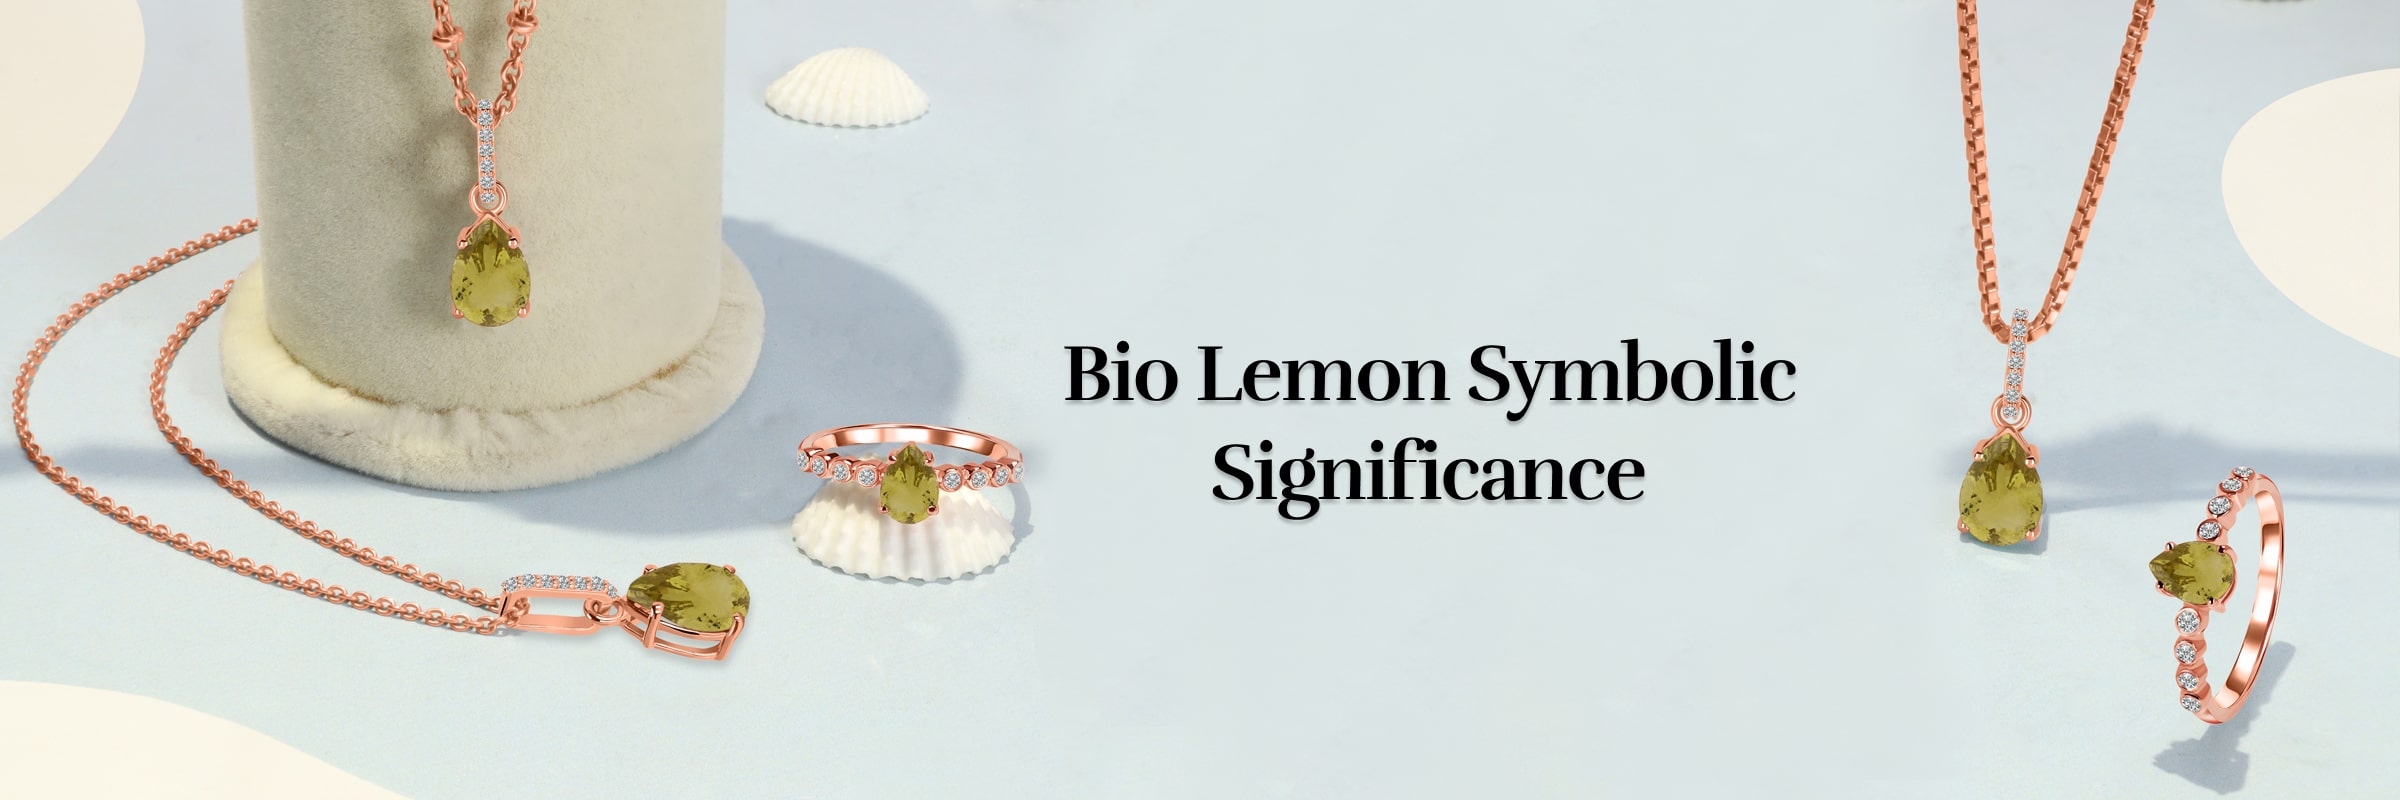 Bio Lemon Meaning and symbolism